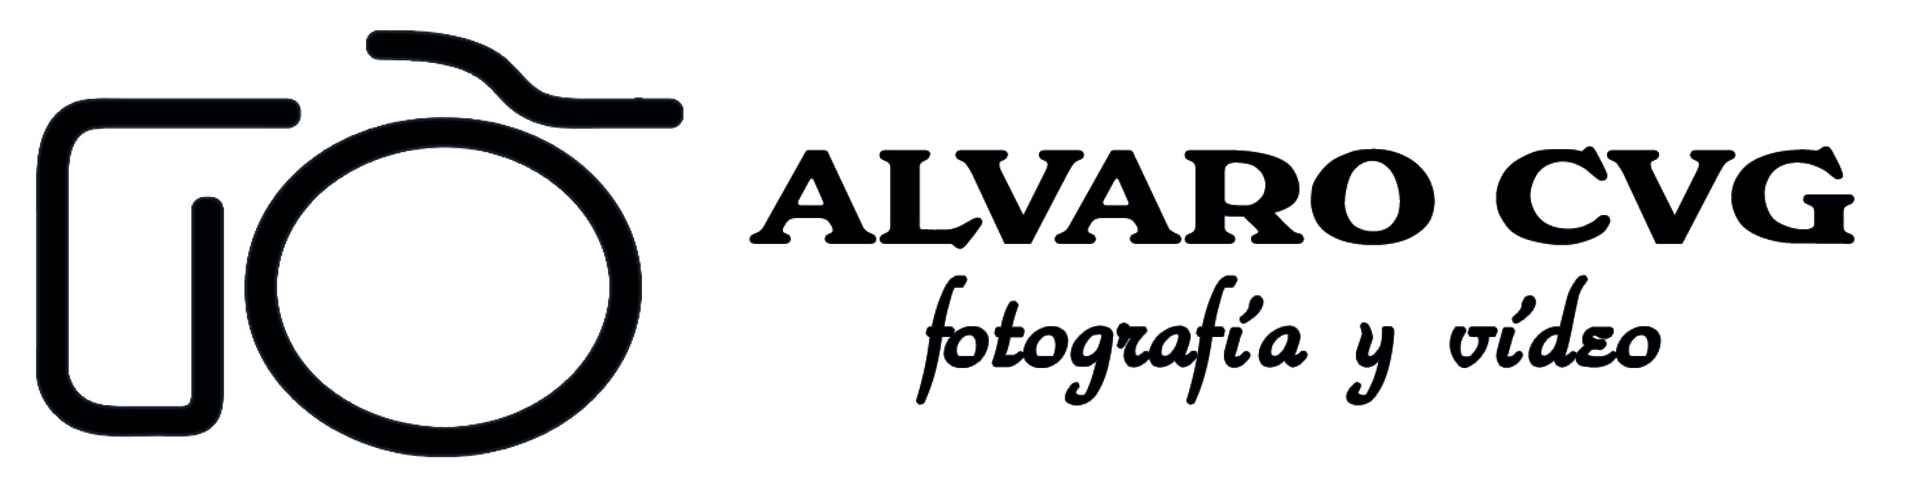 Alvaro CvG